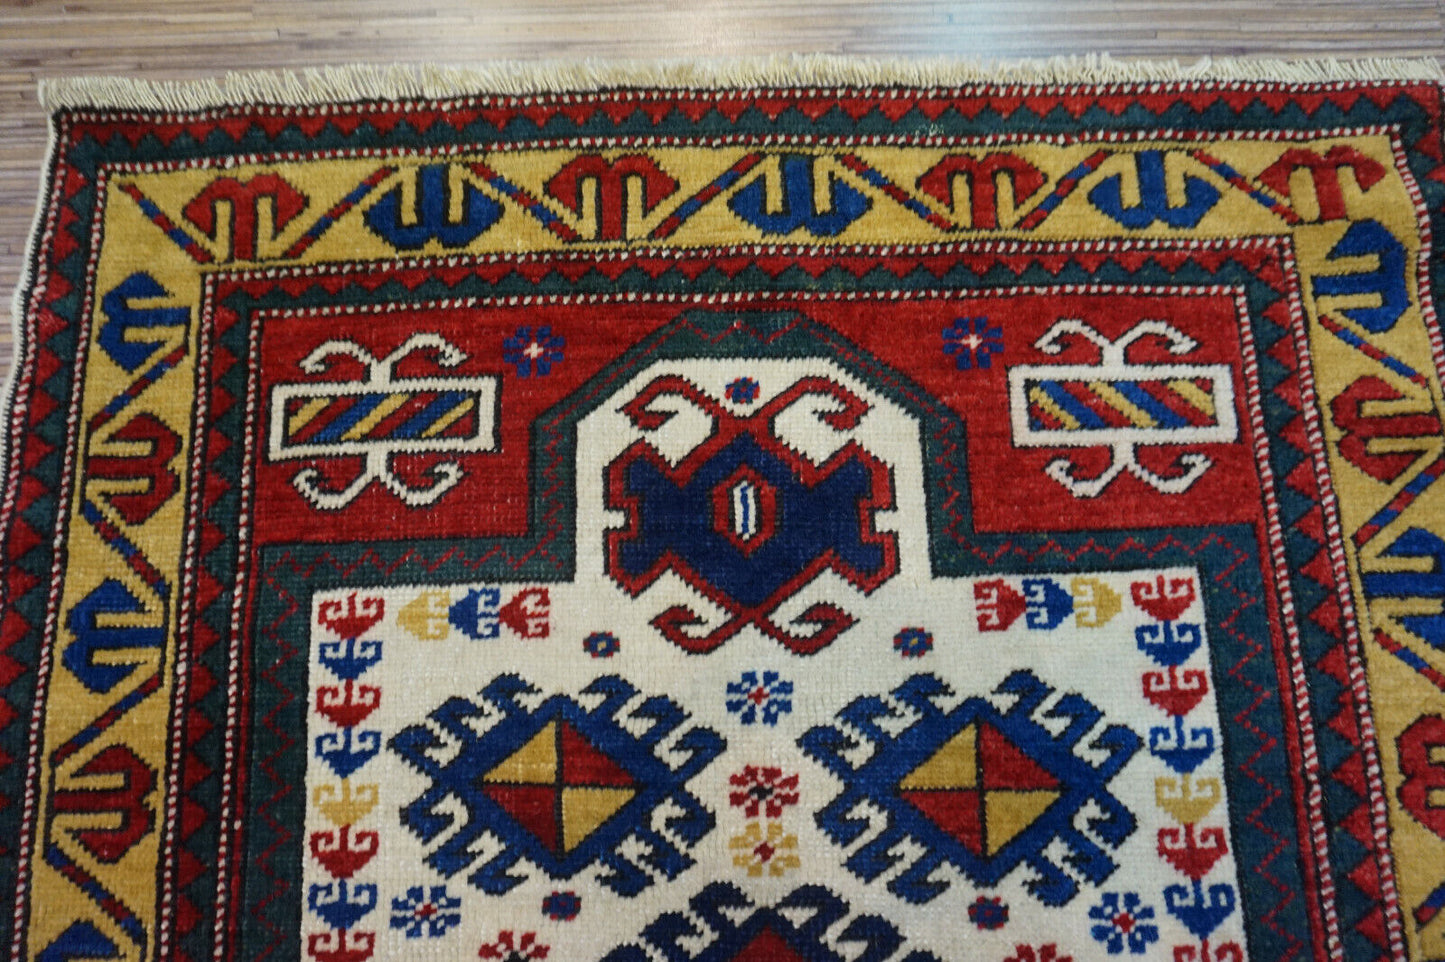 Front view of the Handmade Antique Caucasian Kazak Prayer Rug highlighting its traditional motifs